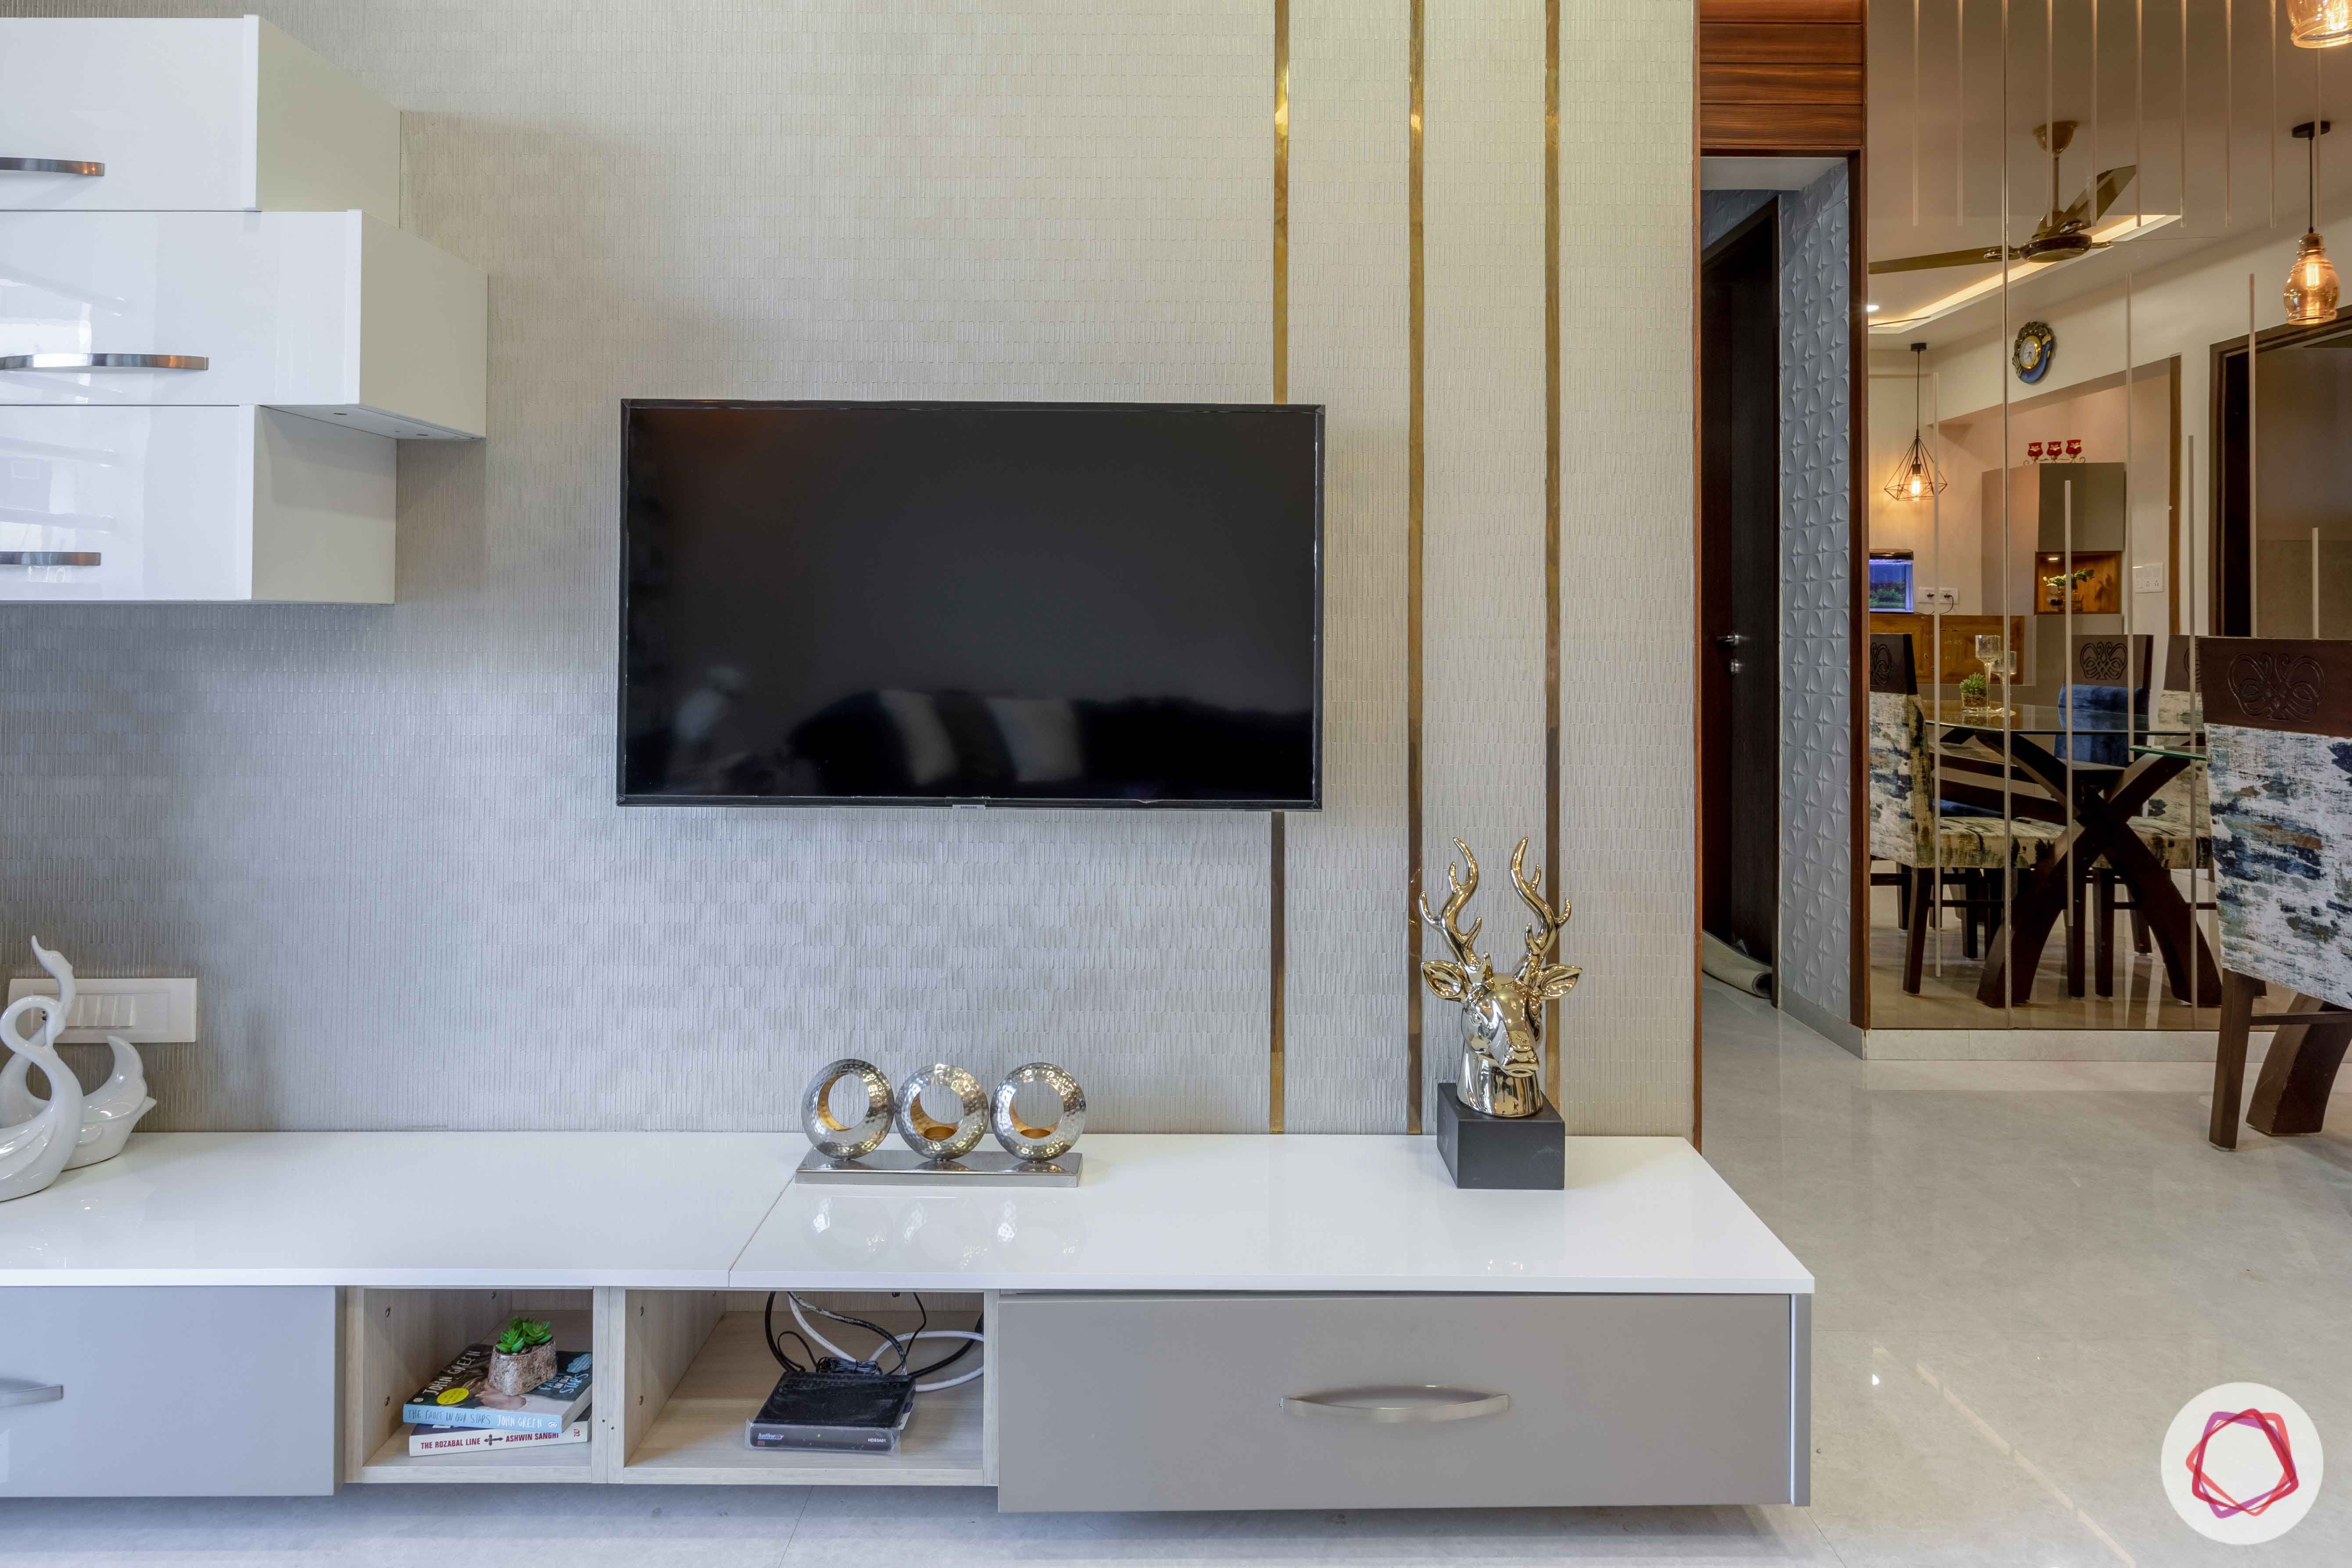 2 bhk flat interior-living room-tv unit-texture wallpaper-acrylic finish cabinets